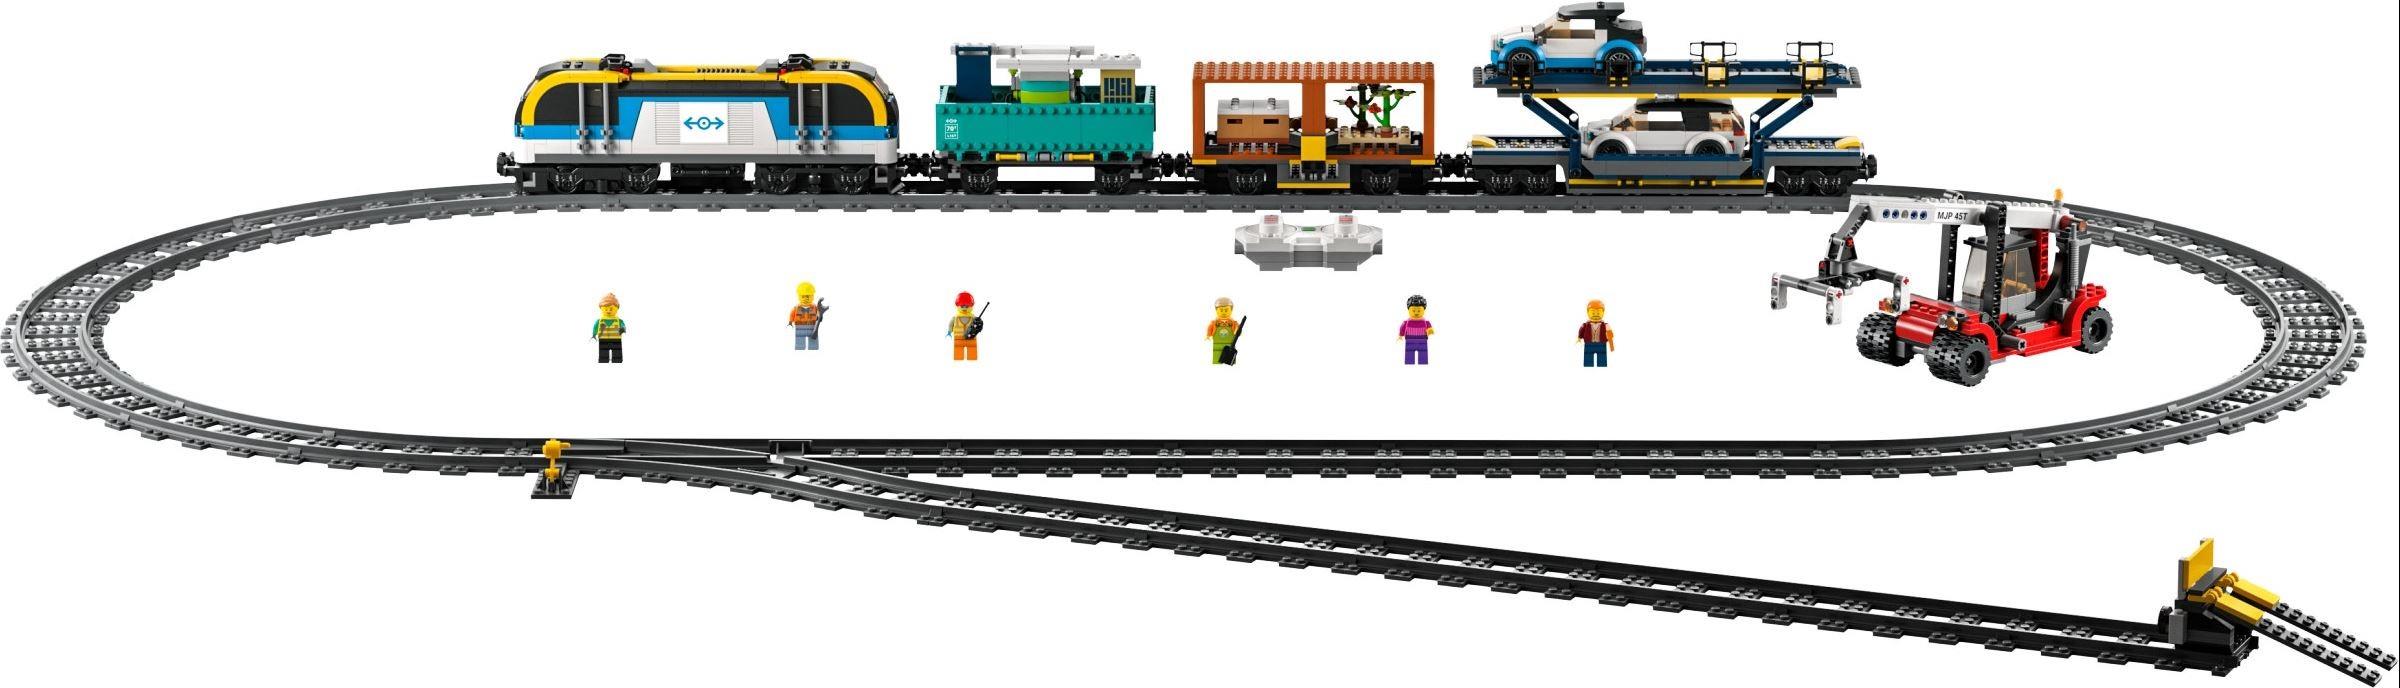 LEGO 60336 City Freight |